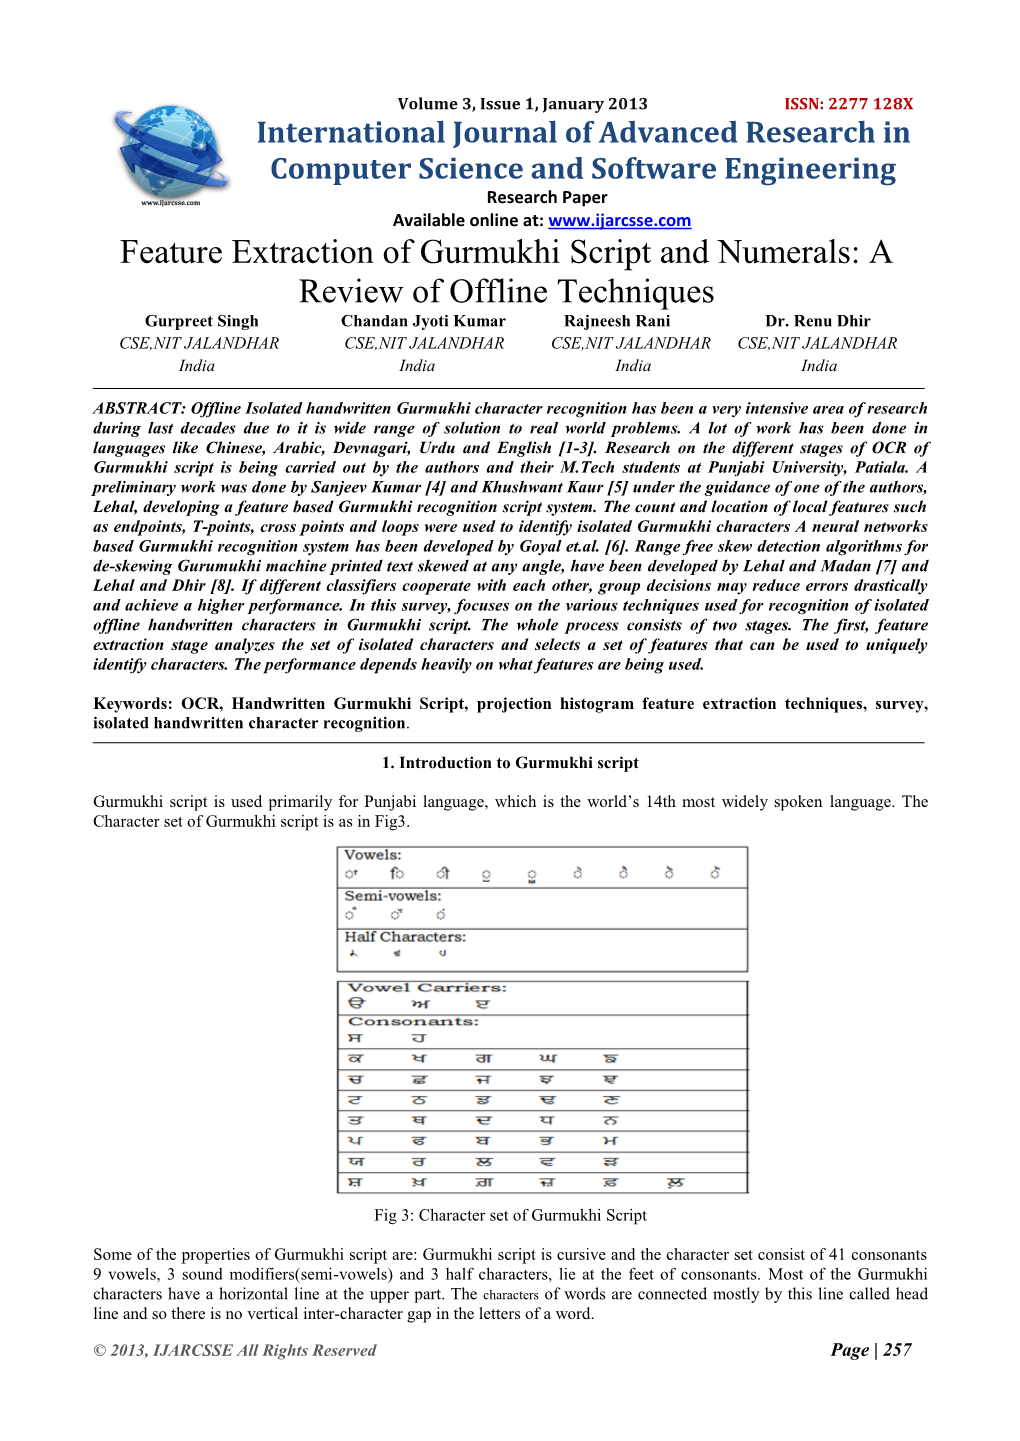 Feature Extraction of Gurmukhi Script and Numerals: a Review of Offline Techniques Gurpreet Singh Chandan Jyoti Kumar Rajneesh Rani Dr